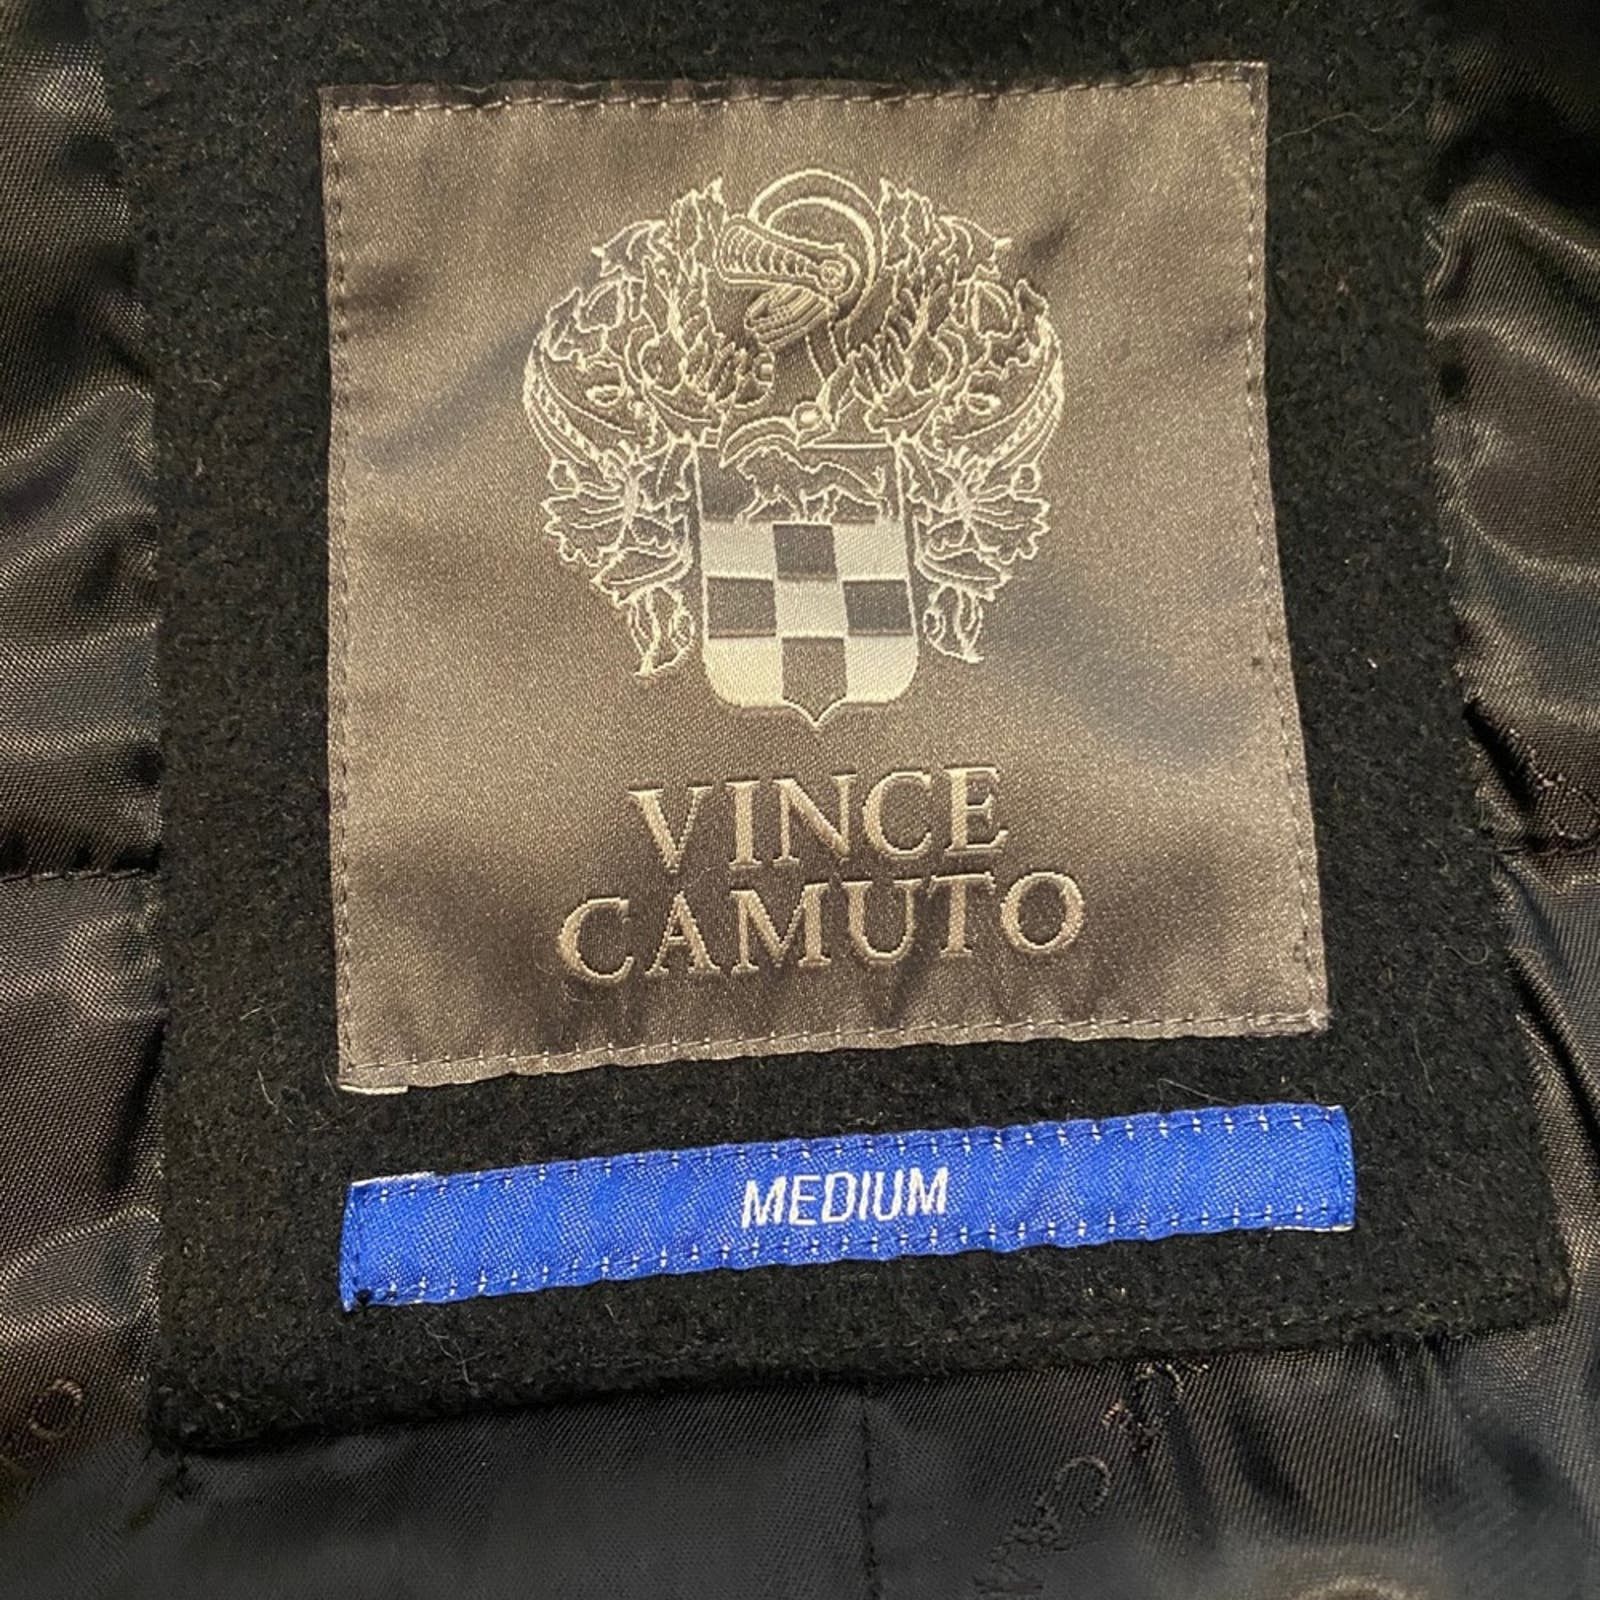 Vince Camuto Vince Camuto Black Zip Up Jacket / Coat Size Medium Size US M / EU 48-50 / 2 - 4 Thumbnail